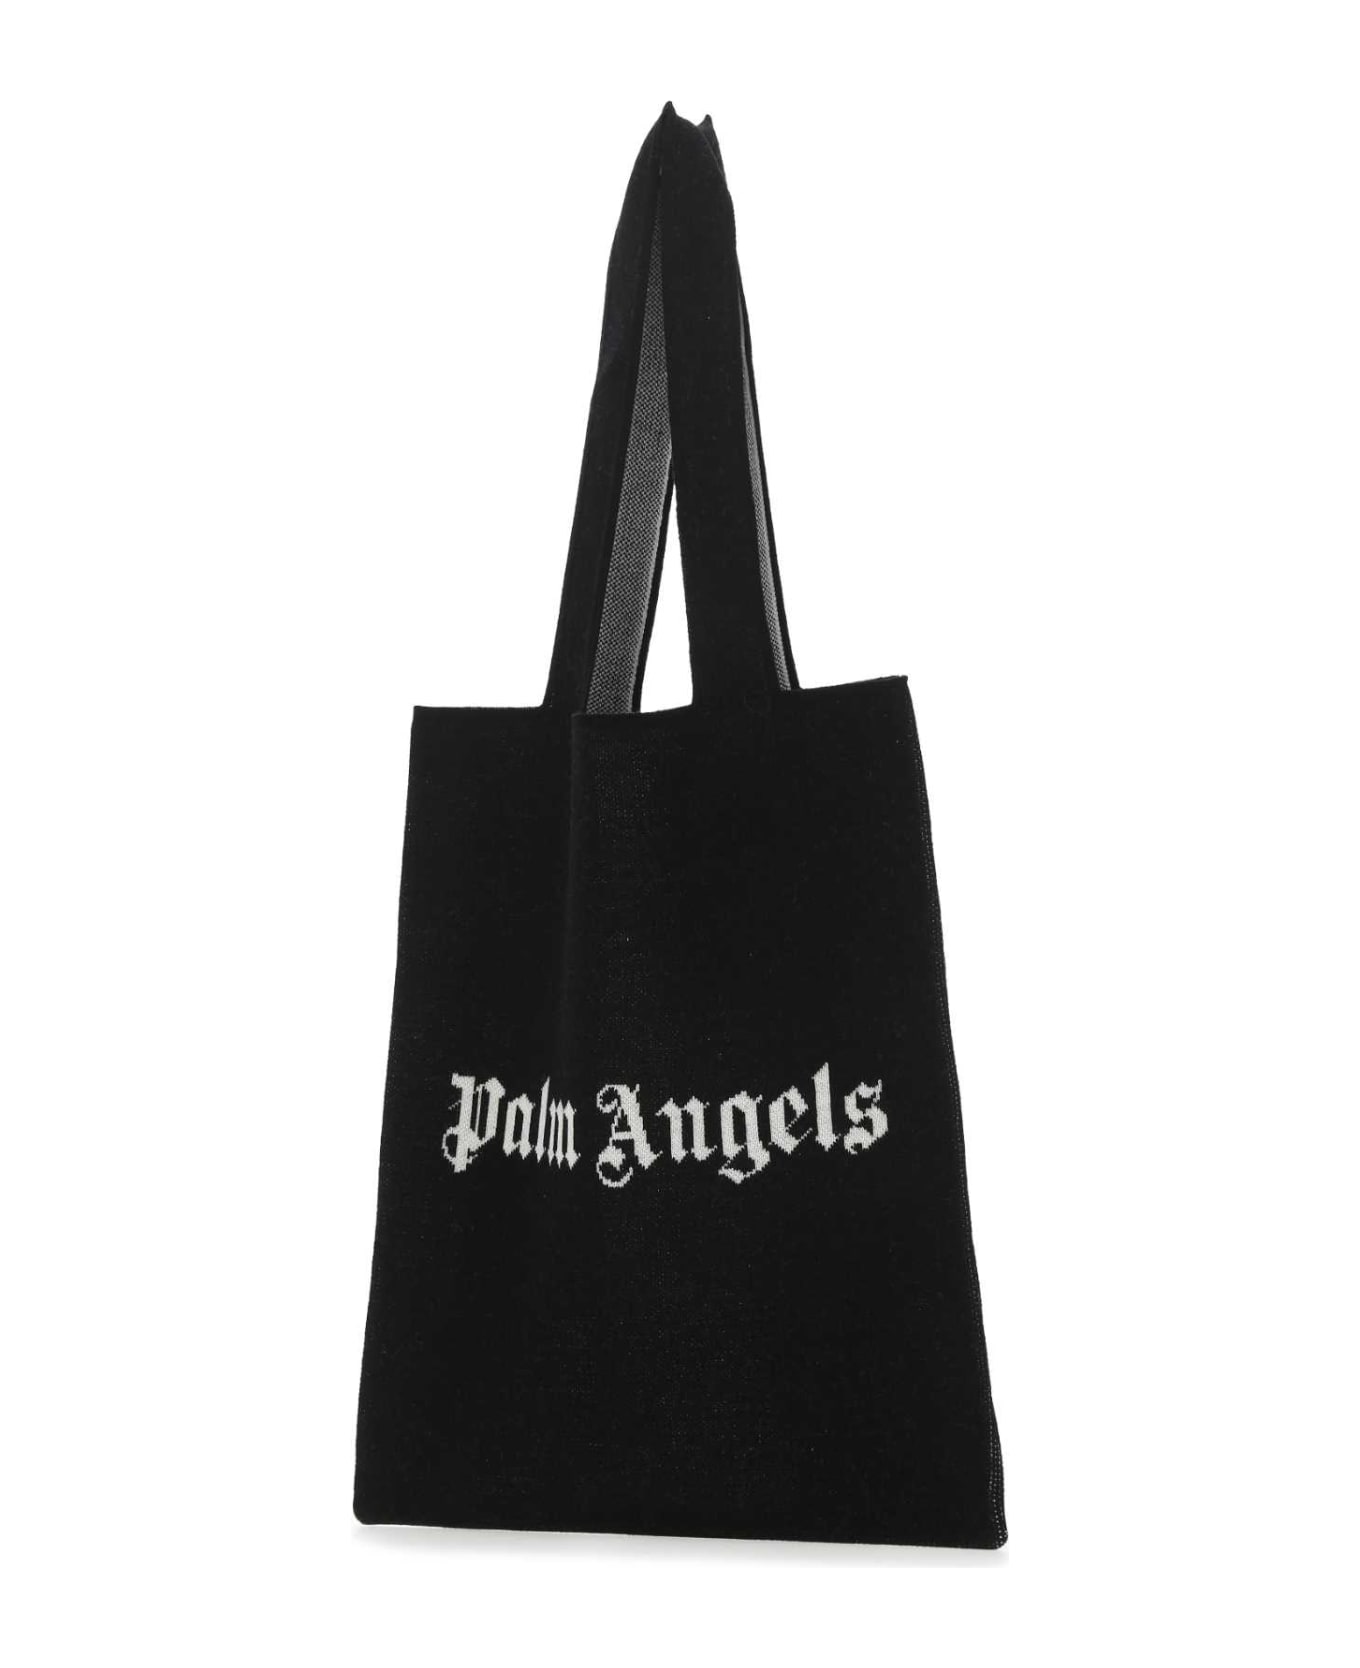 Palm Angels Black Wool Blend Shopping Bag - 1001 トートバッグ